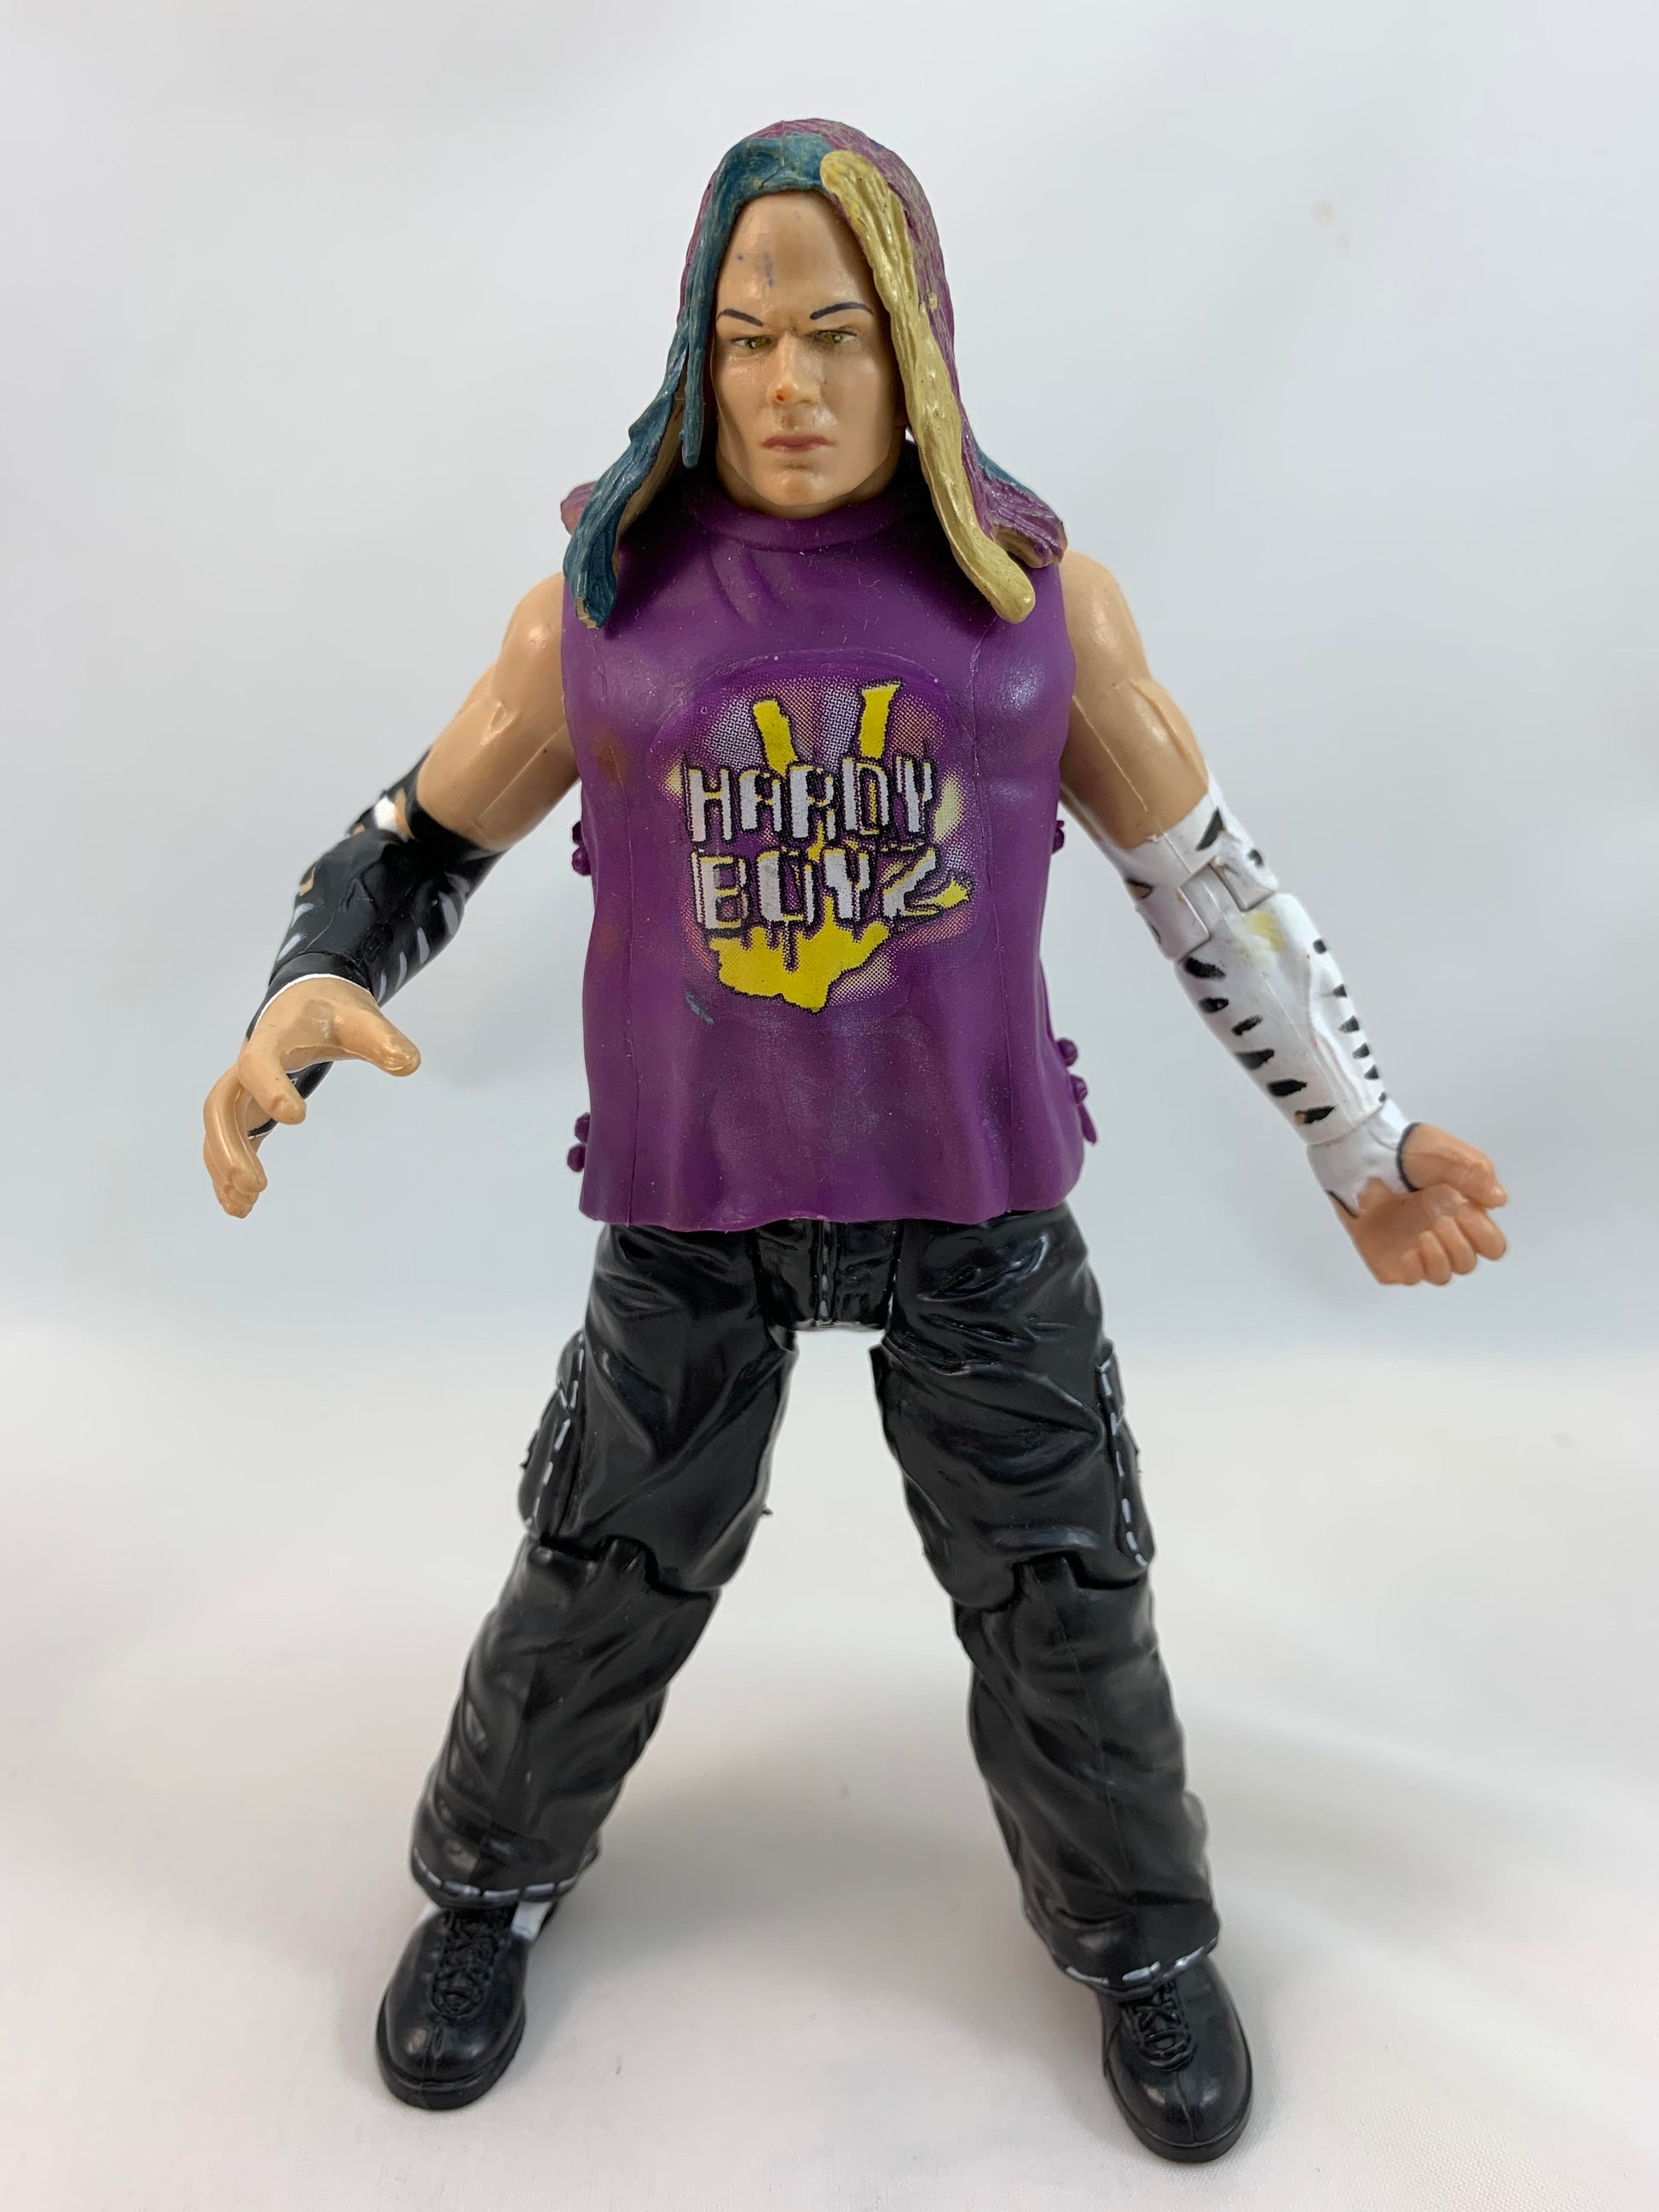 1999 Jakks Pacific Titan Tron Jeff Hardy The Hardy Boyz - Loose Action Figure